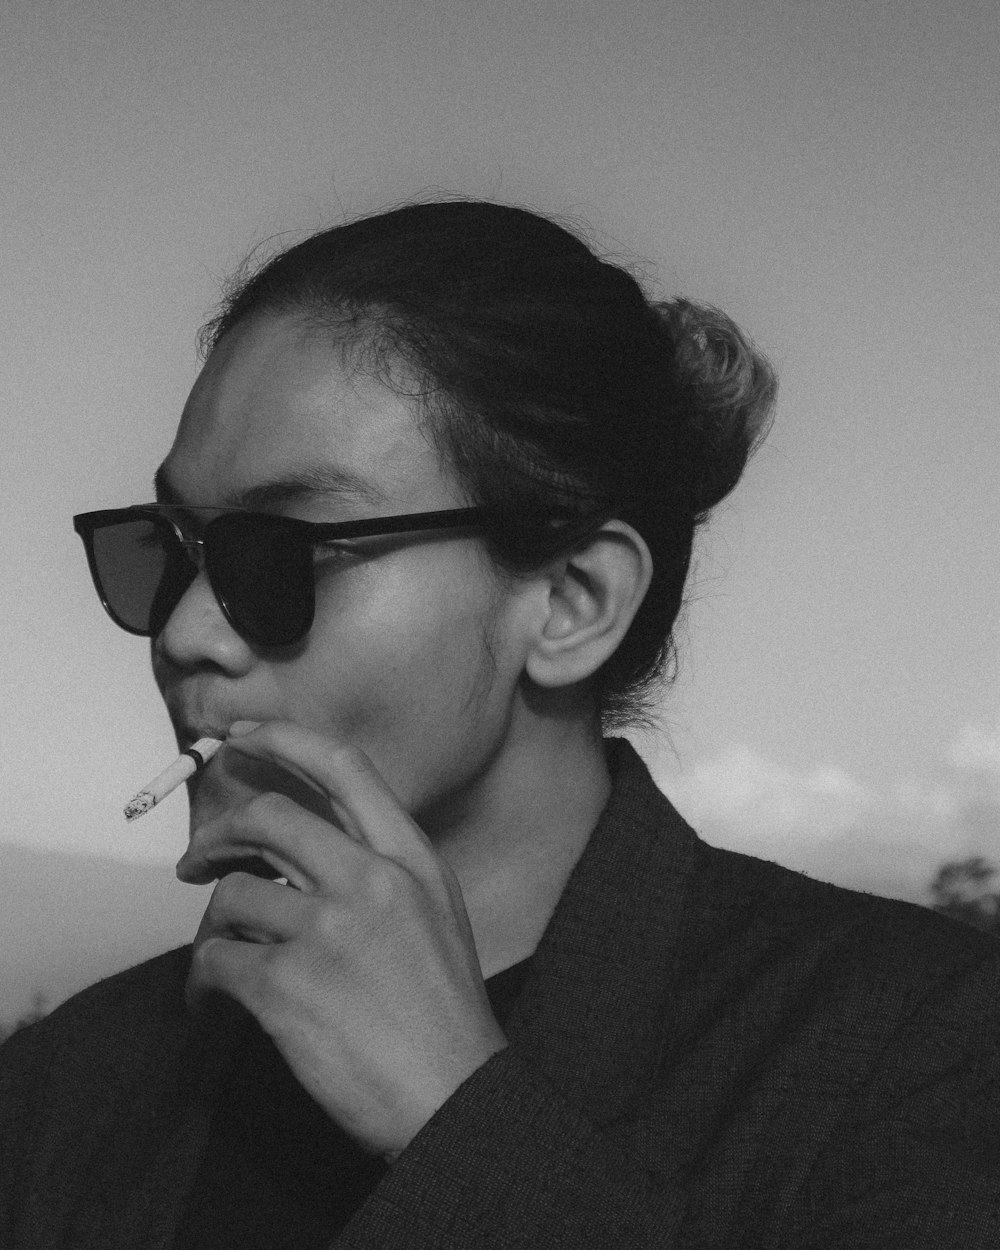 a woman wearing sunglasses smoking a cigarette